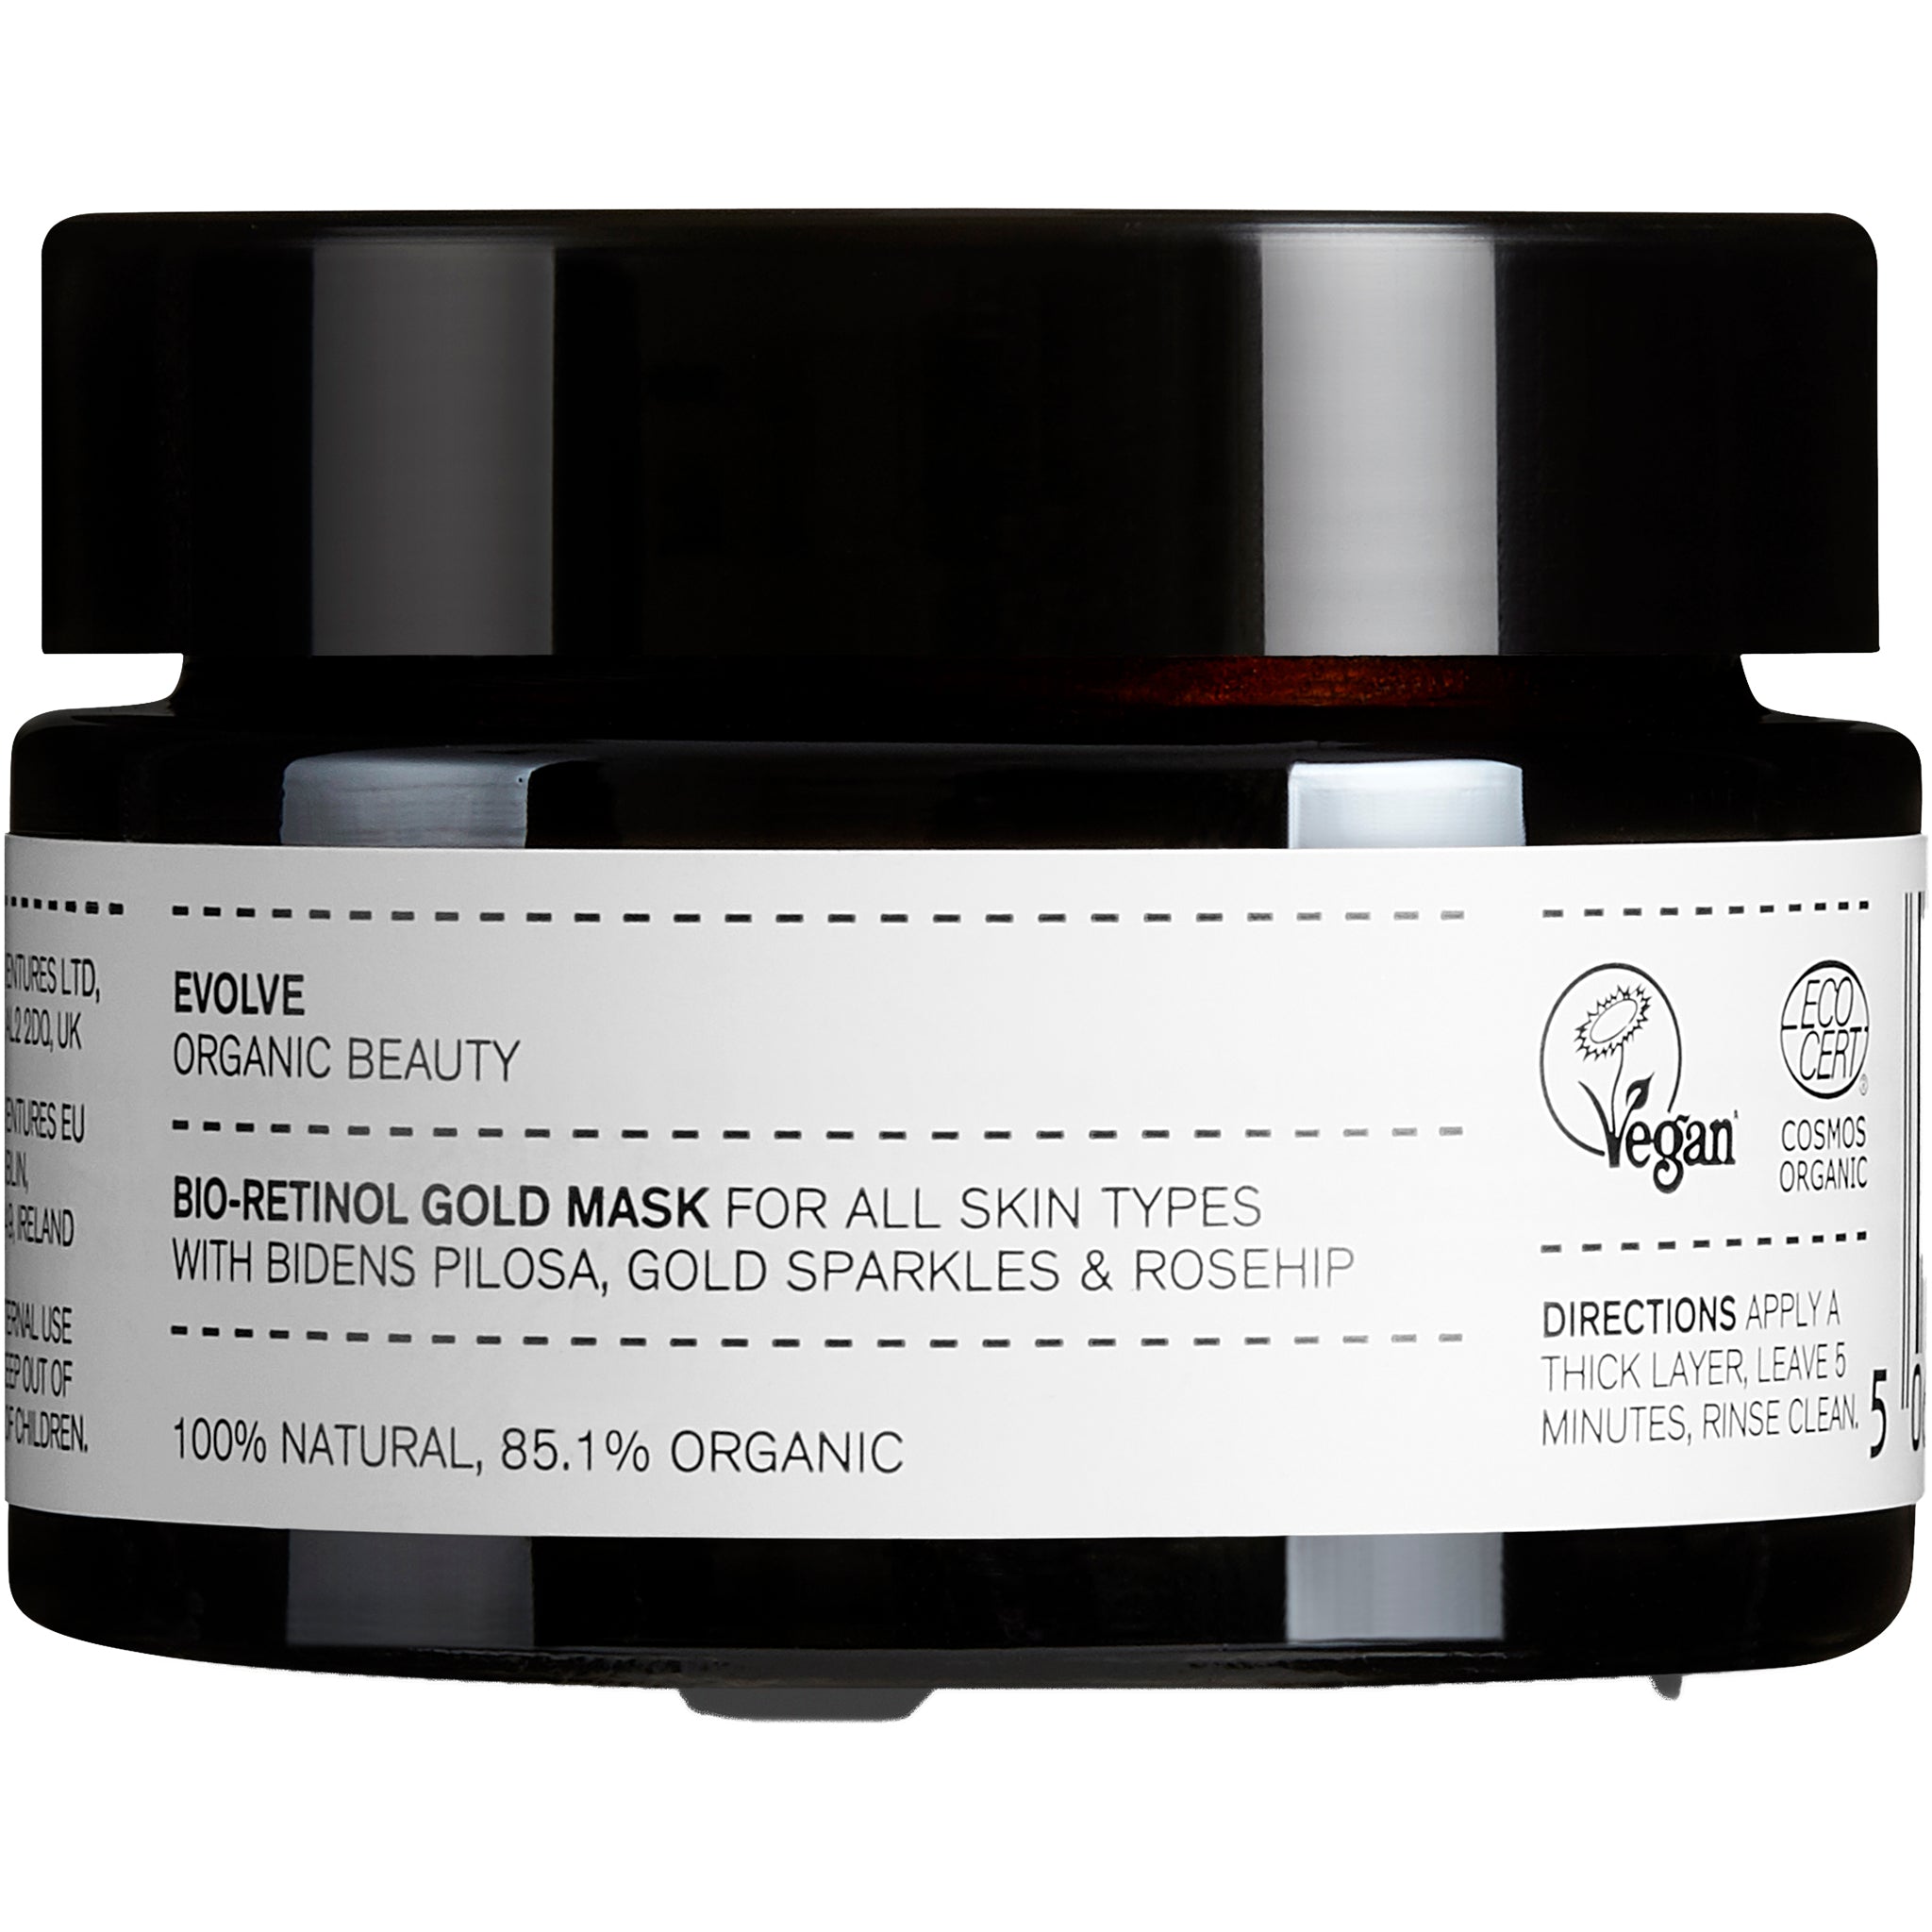 Bio-Retinol Gold Mask - mypure.co.uk